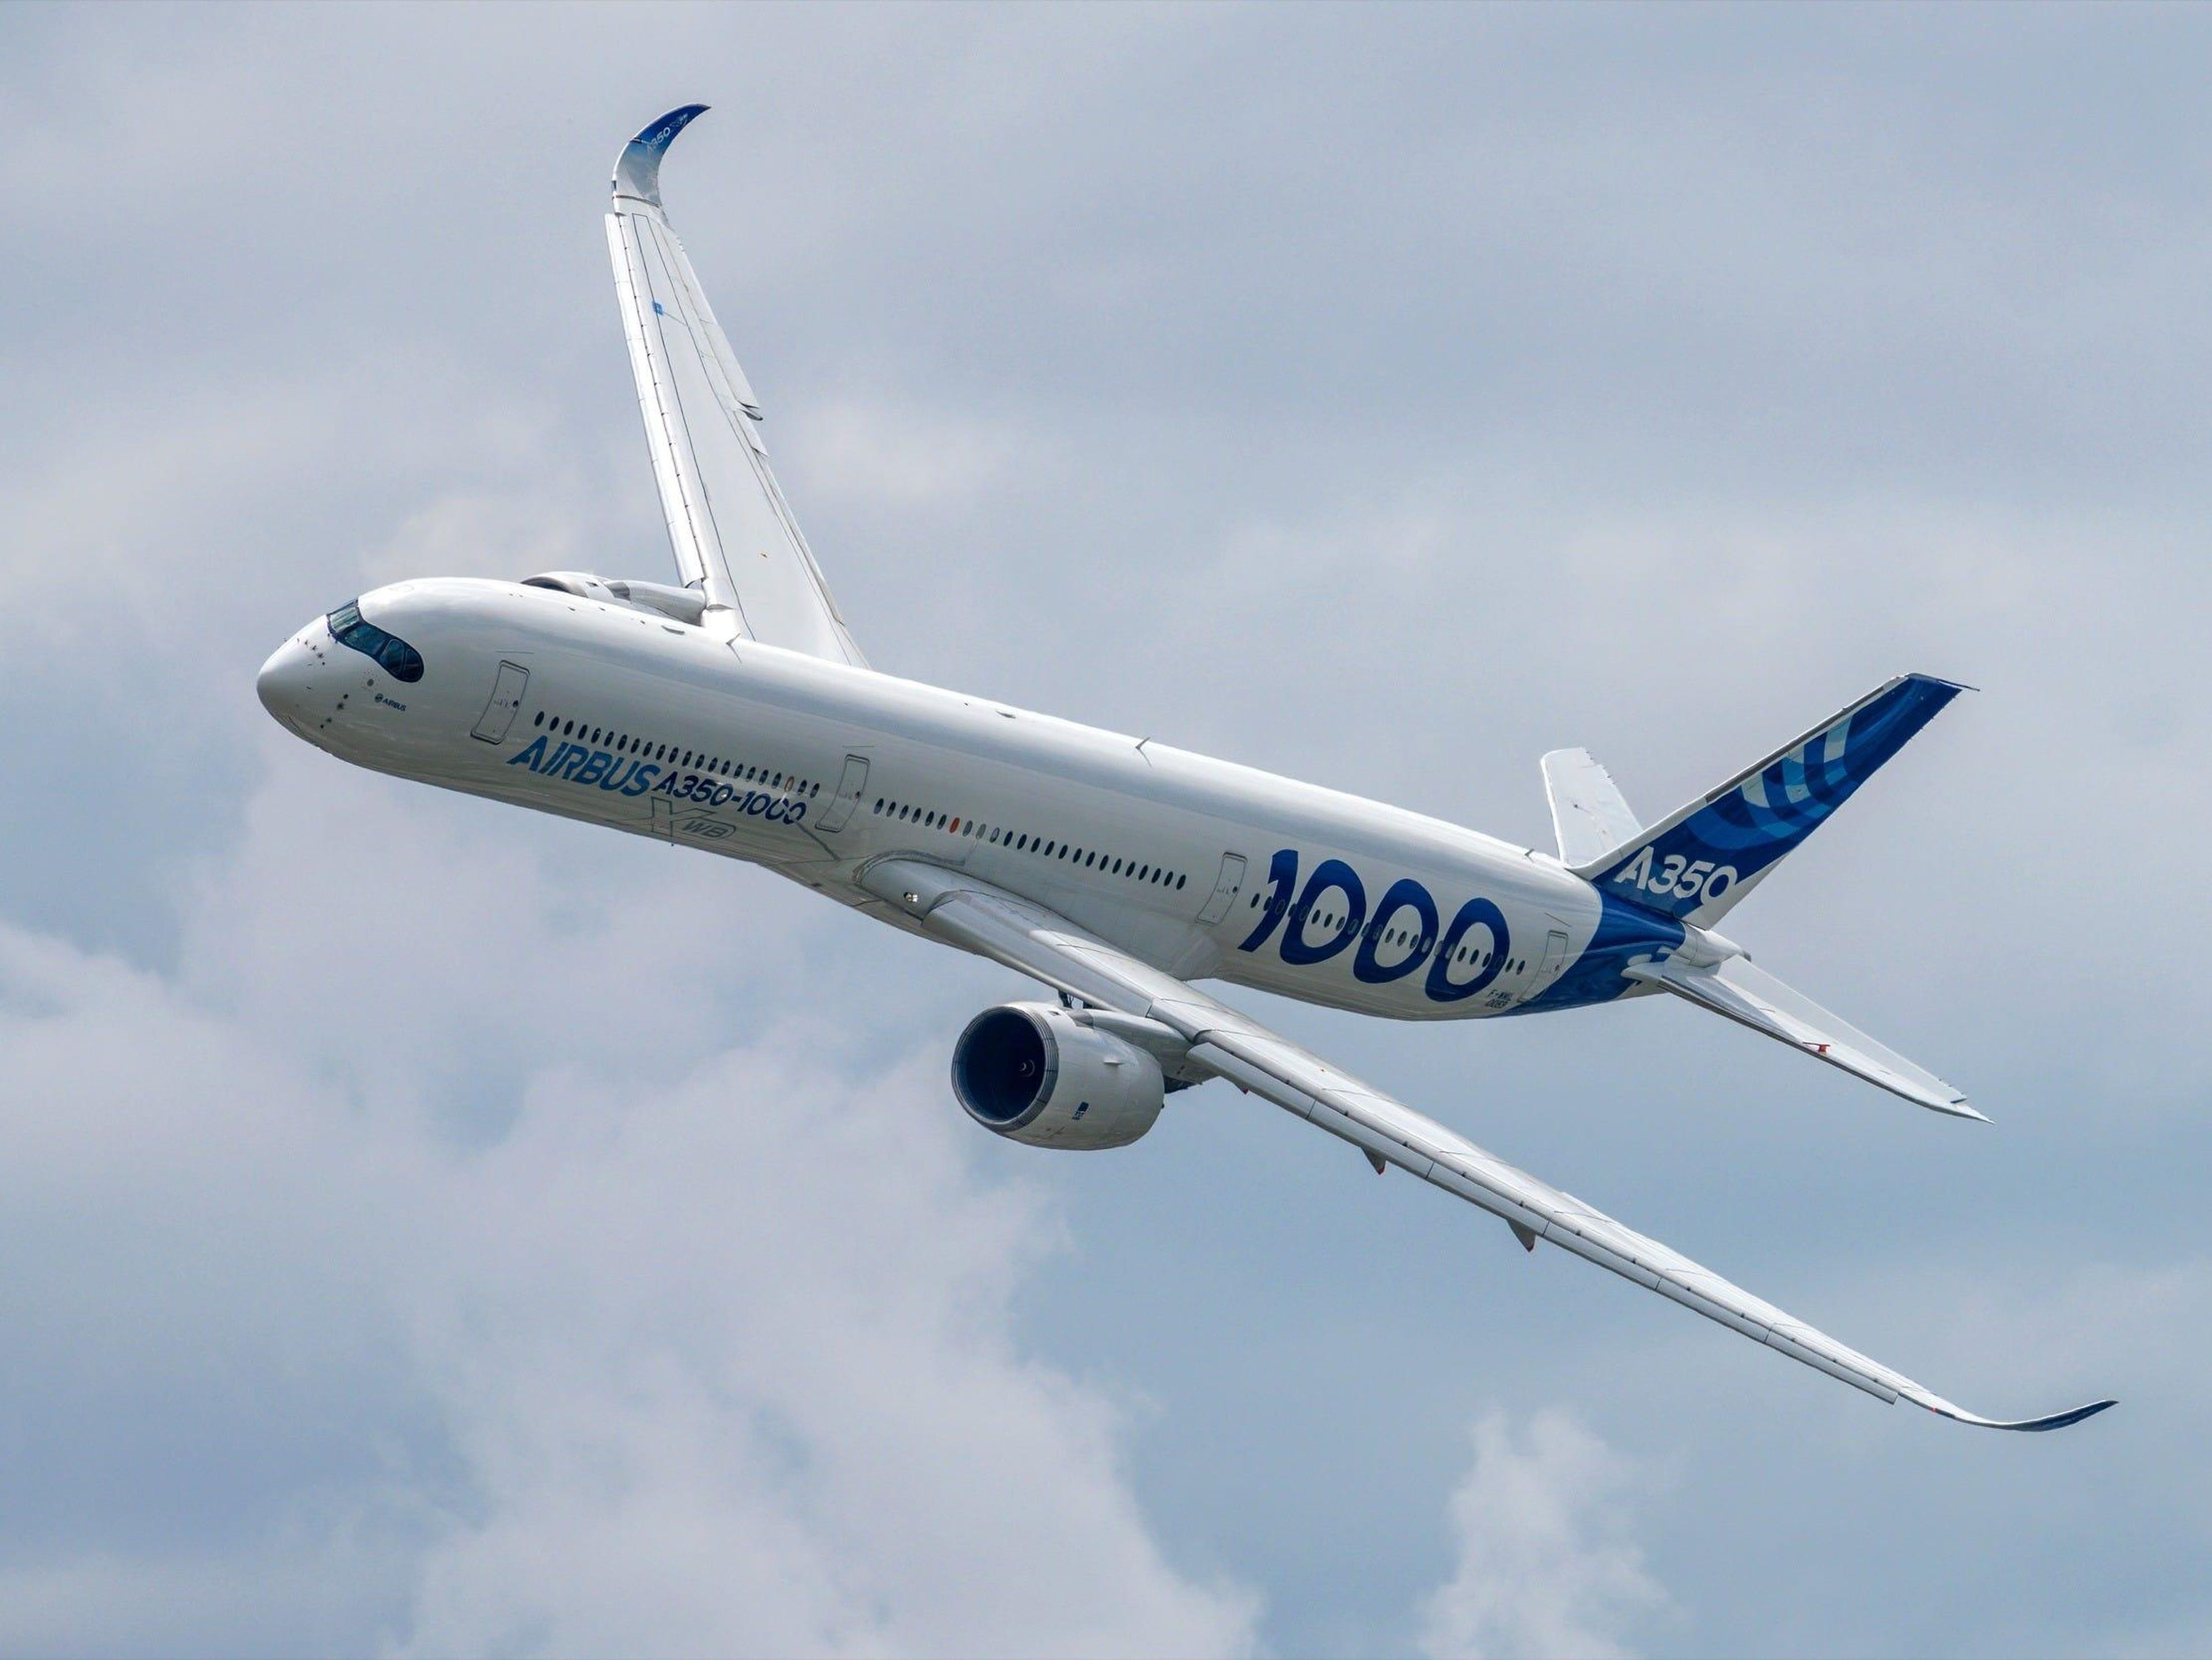 An Airbus A350-1000 XWB aircraft. Tom Buysse/Shutterstock.com